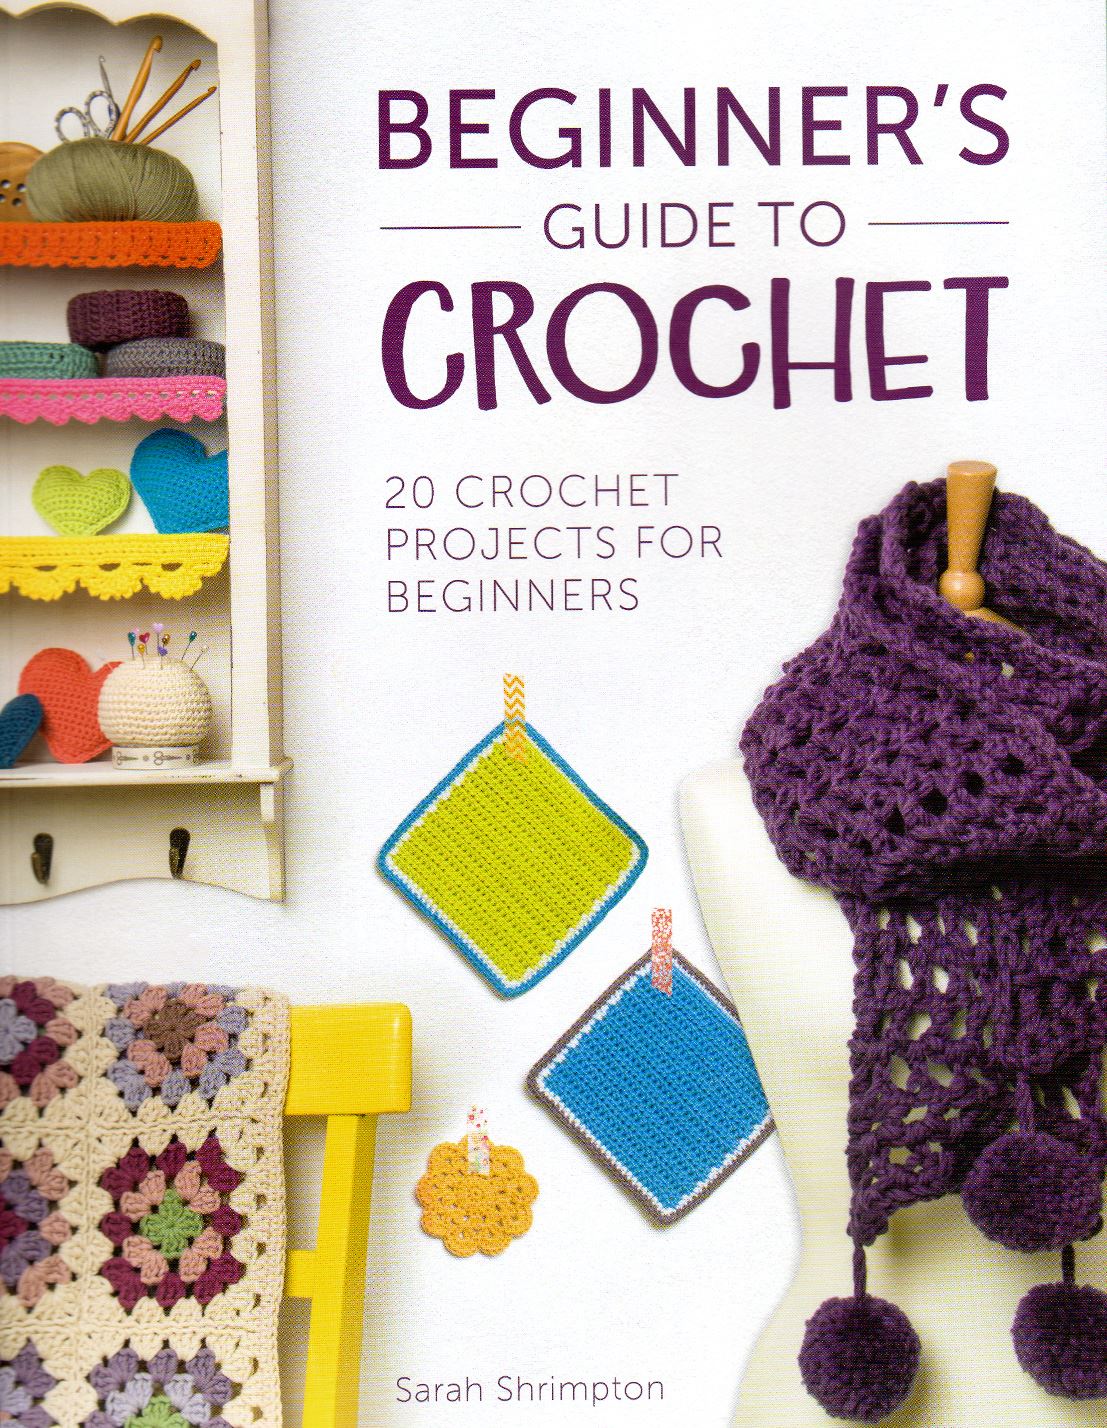 Modern Crochet Bible - Pattern Book by Sarah Shrimpton